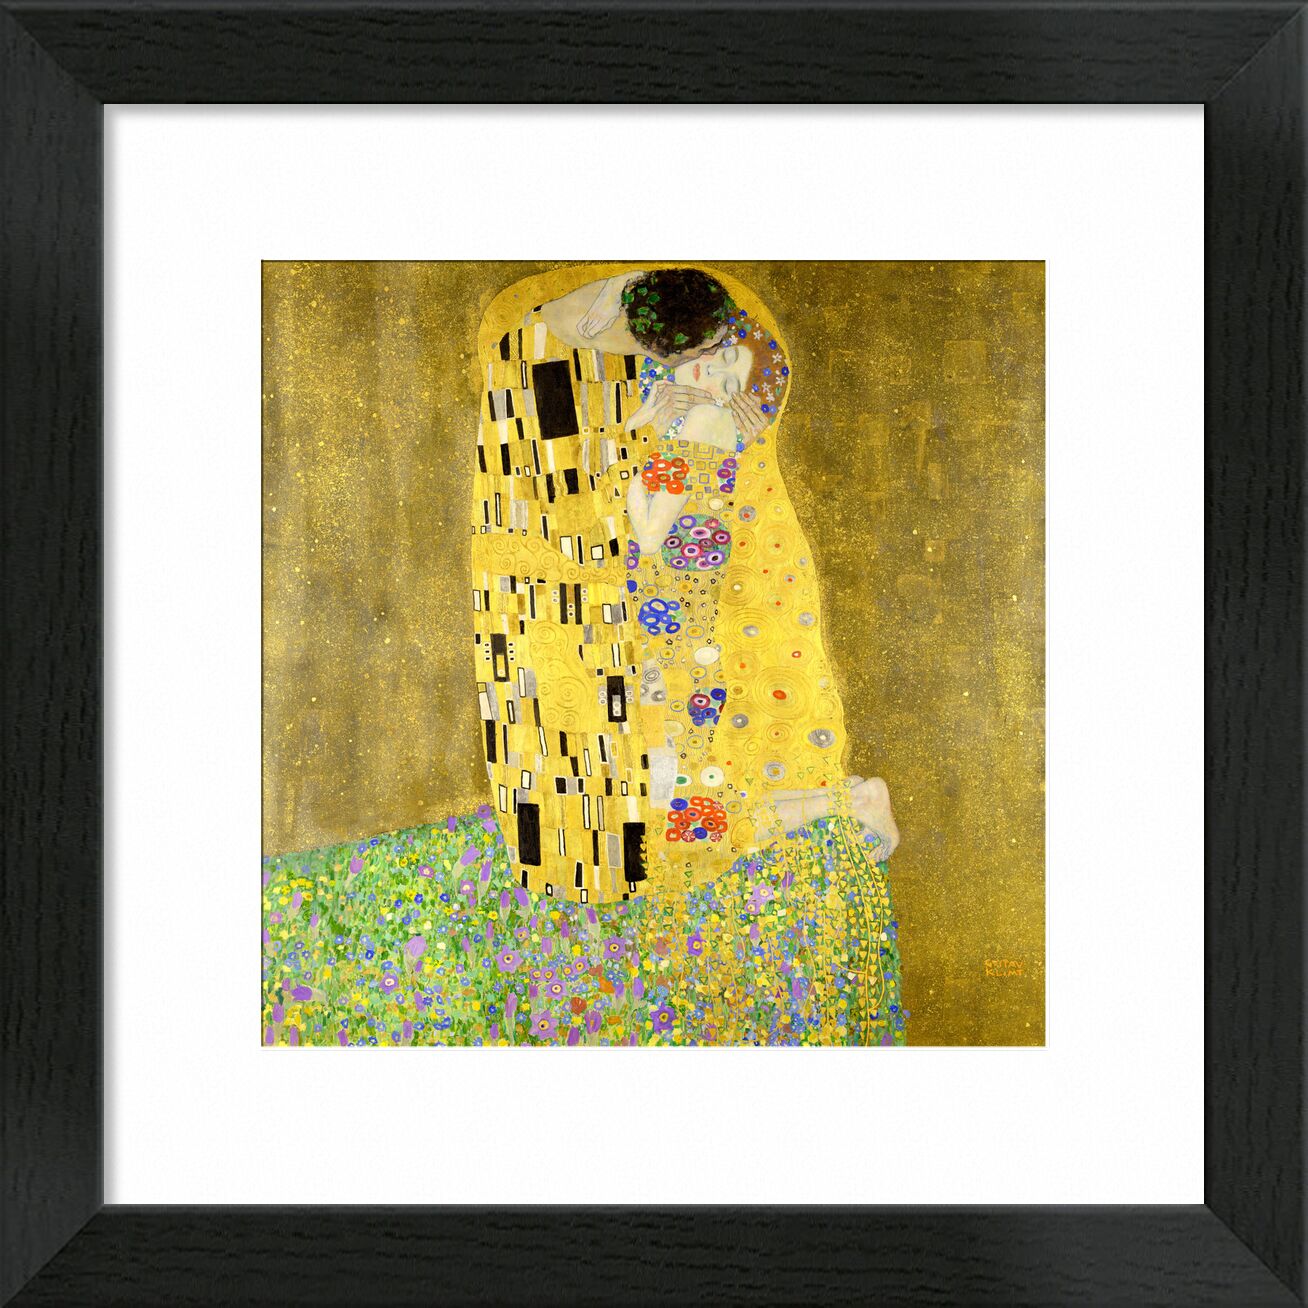 El beso - Gustav Klimt desde Bellas artes, Prodi Art, KLIMT, art nouveau, Beso, hombre, mujer, Pareja, amor, vestido, pintura